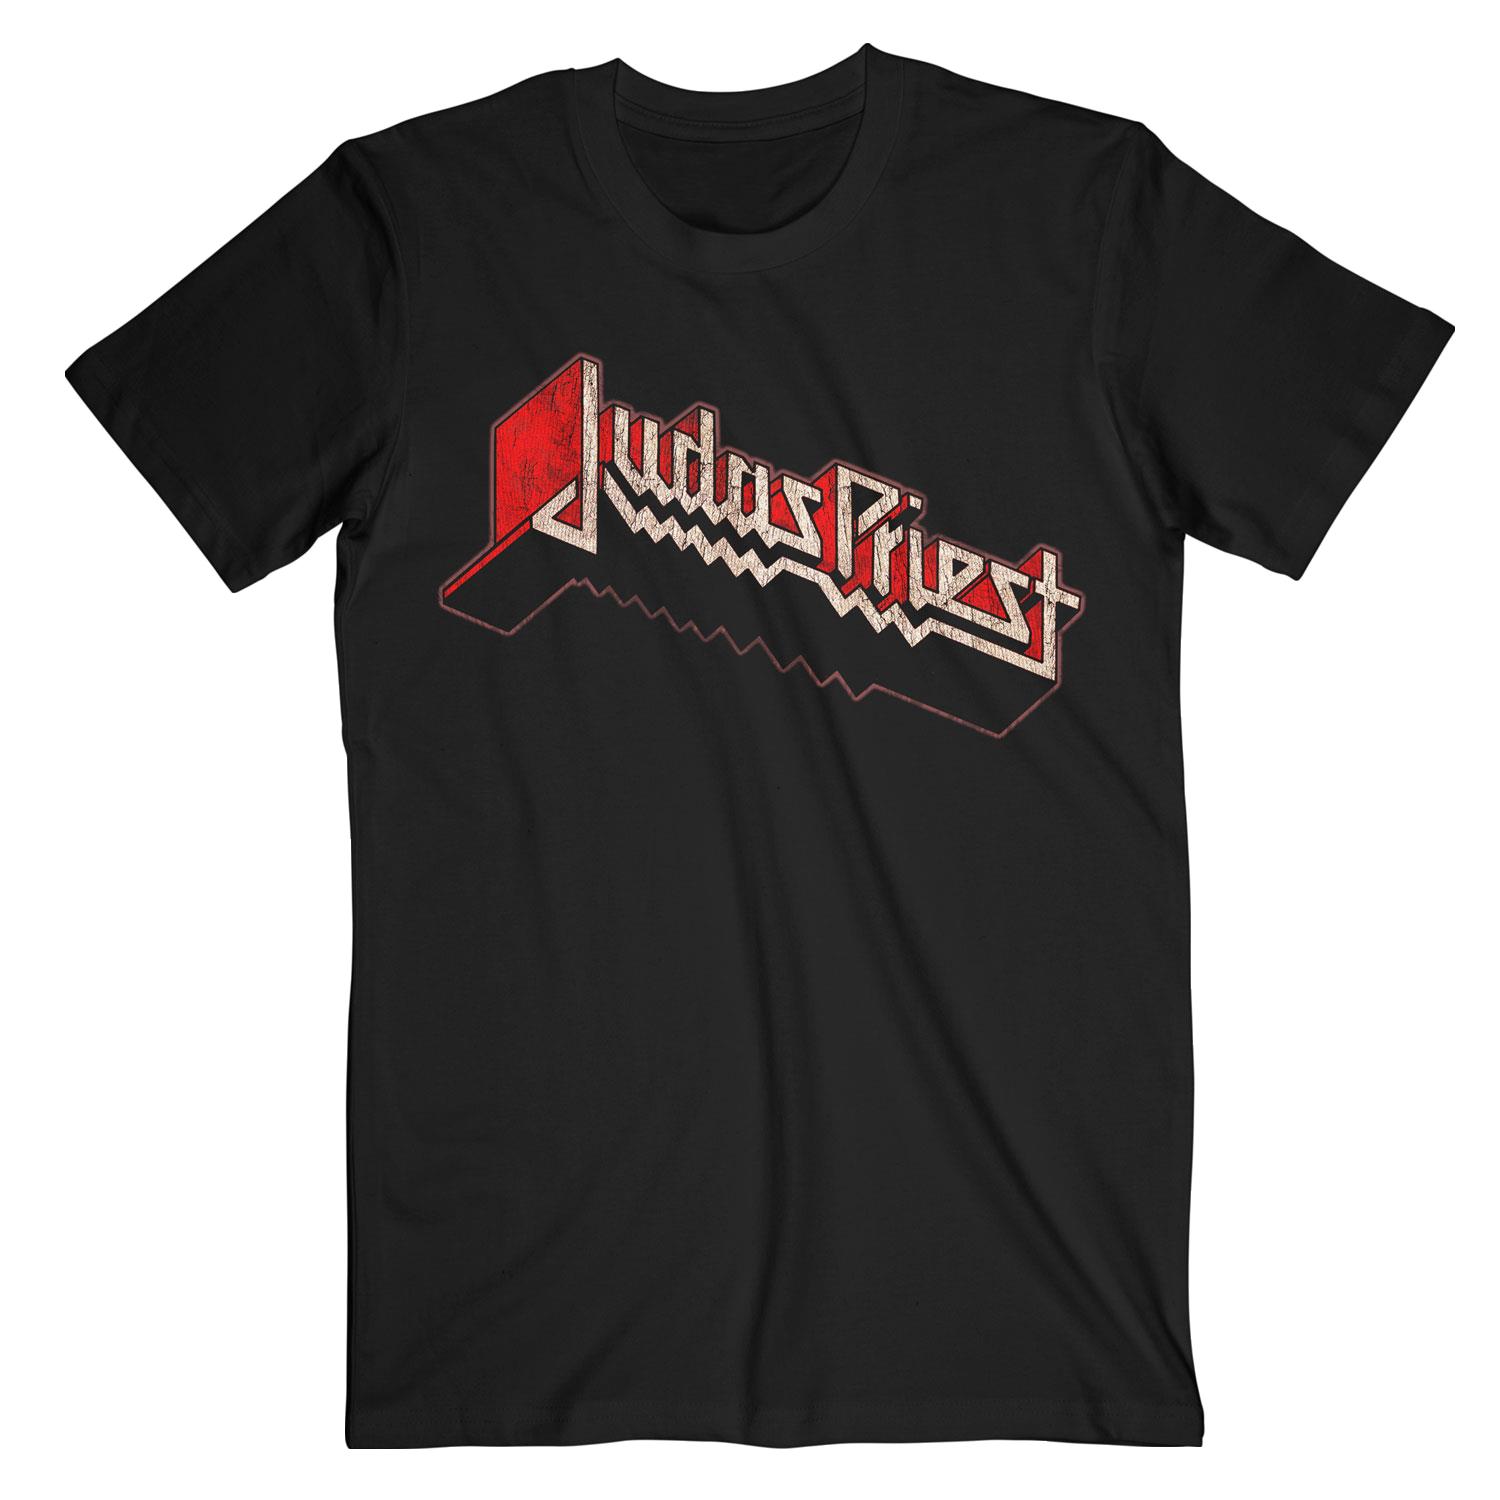 Judas Priest - Corroded Logo T-Shirt